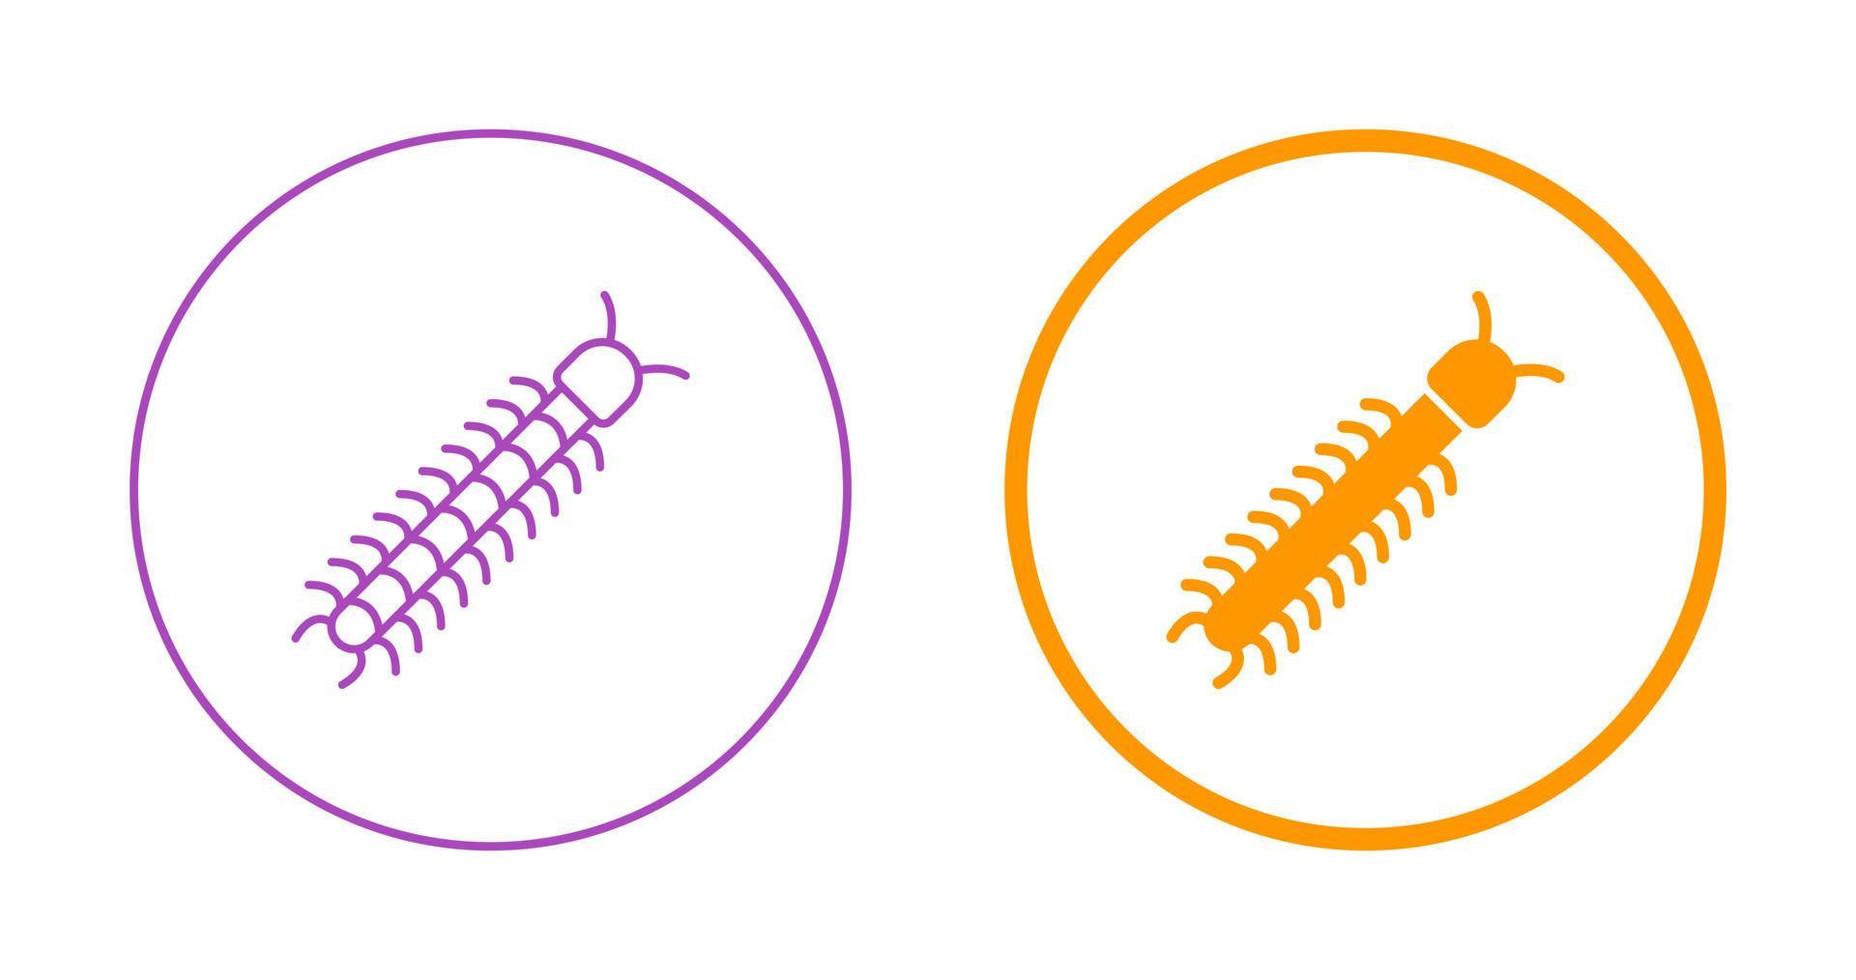 Centipede Vector Icon